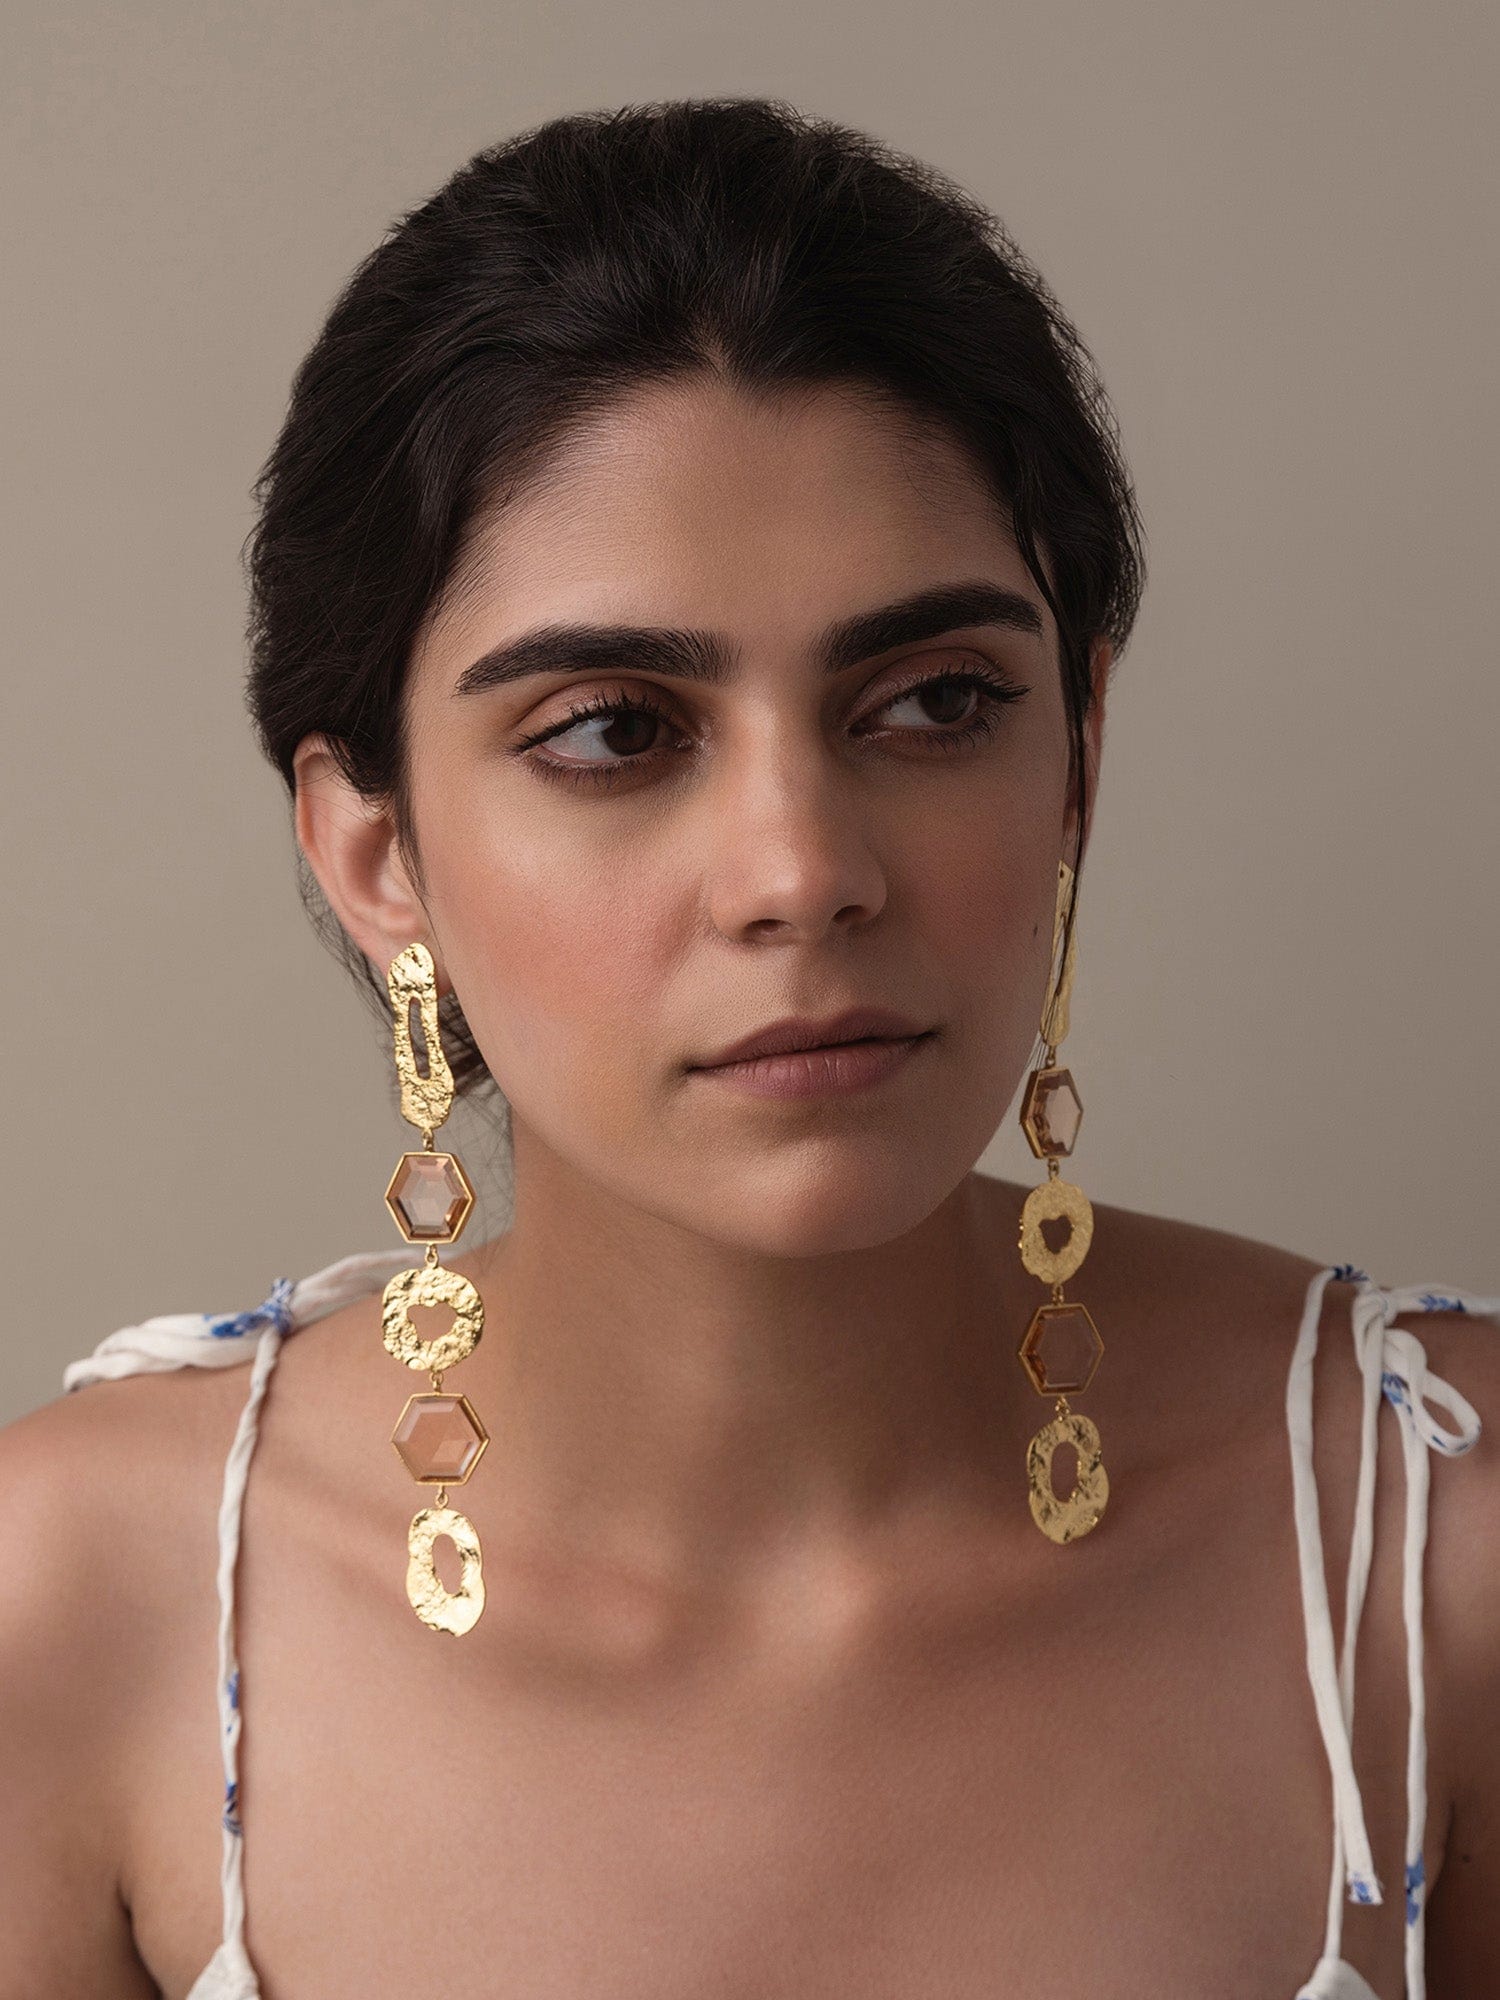 Thalassa earrings